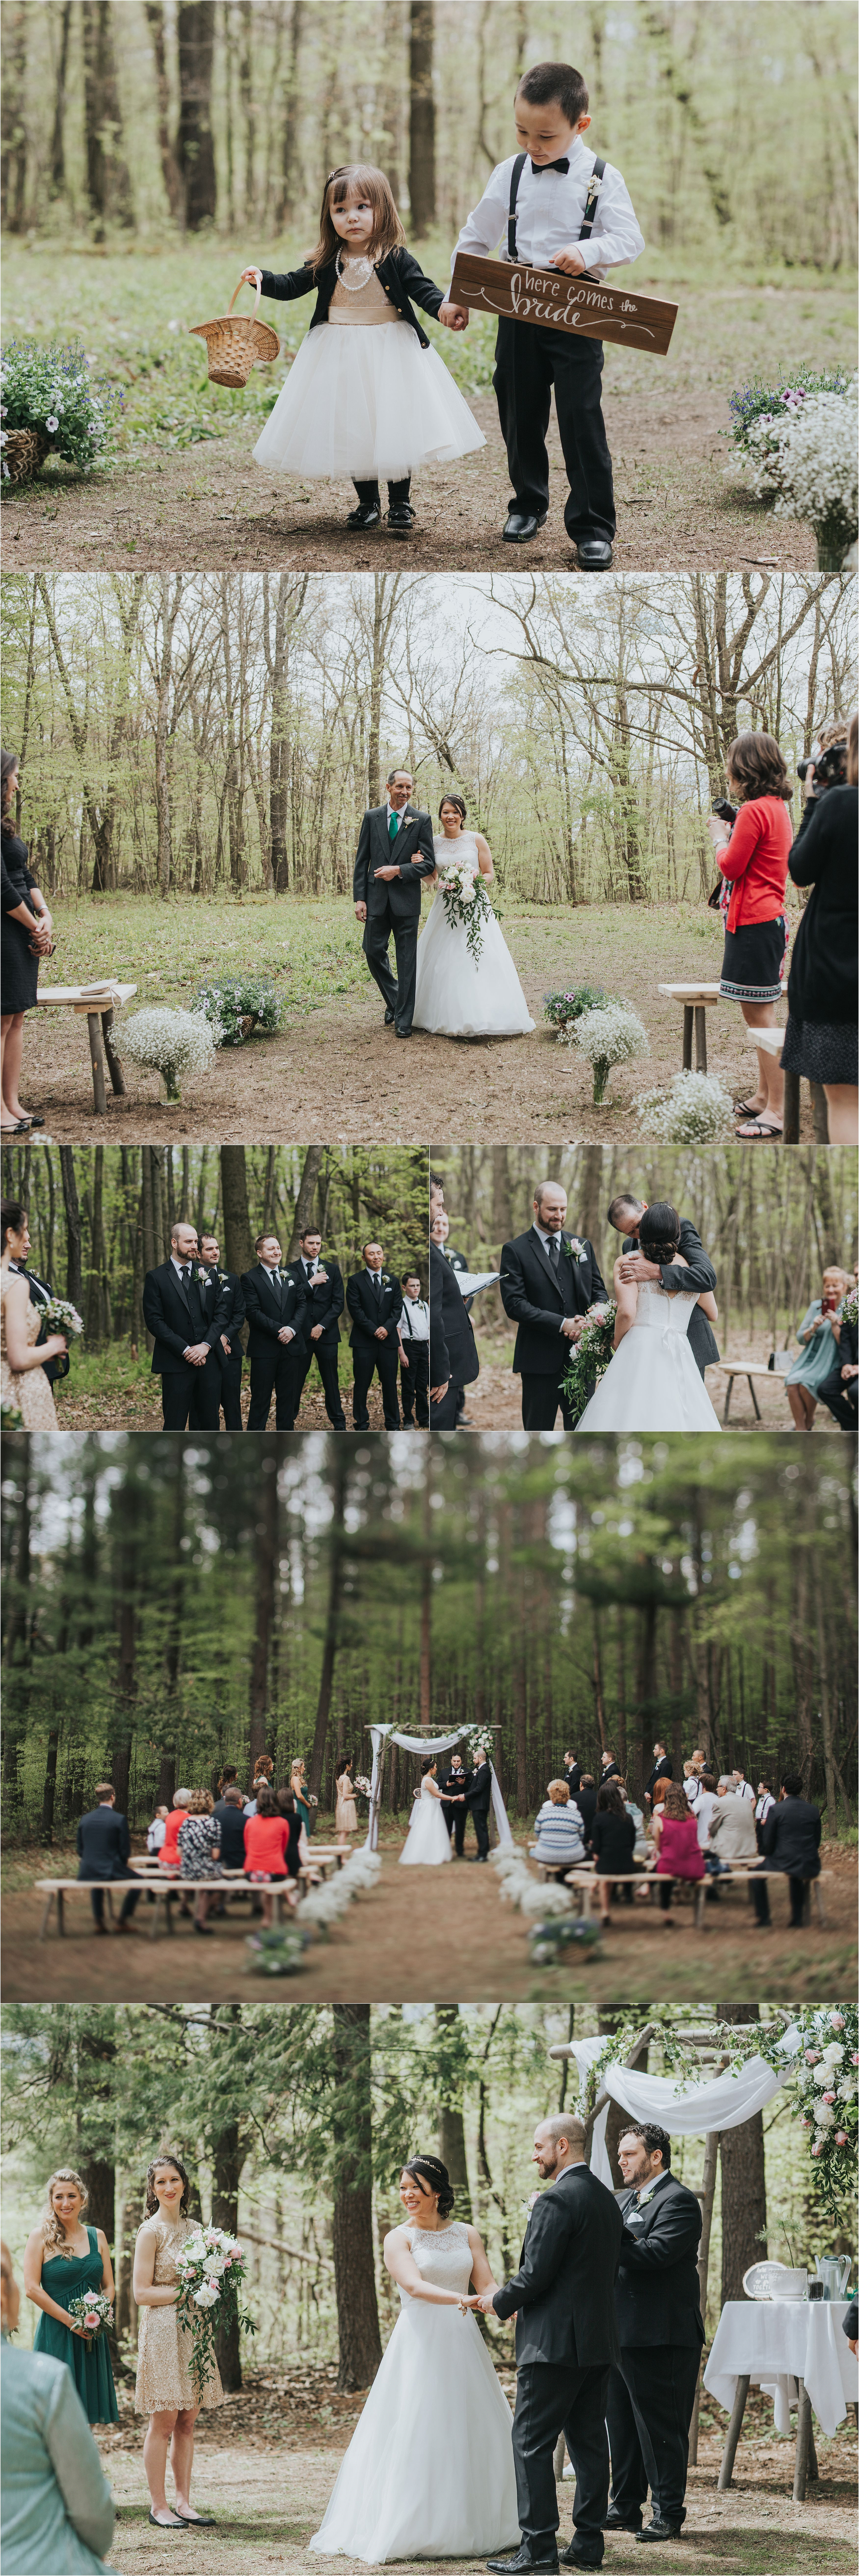 04 woodsy-wedding-at-wolfs-den-knox-pa-oakwood-photo-video.jpg